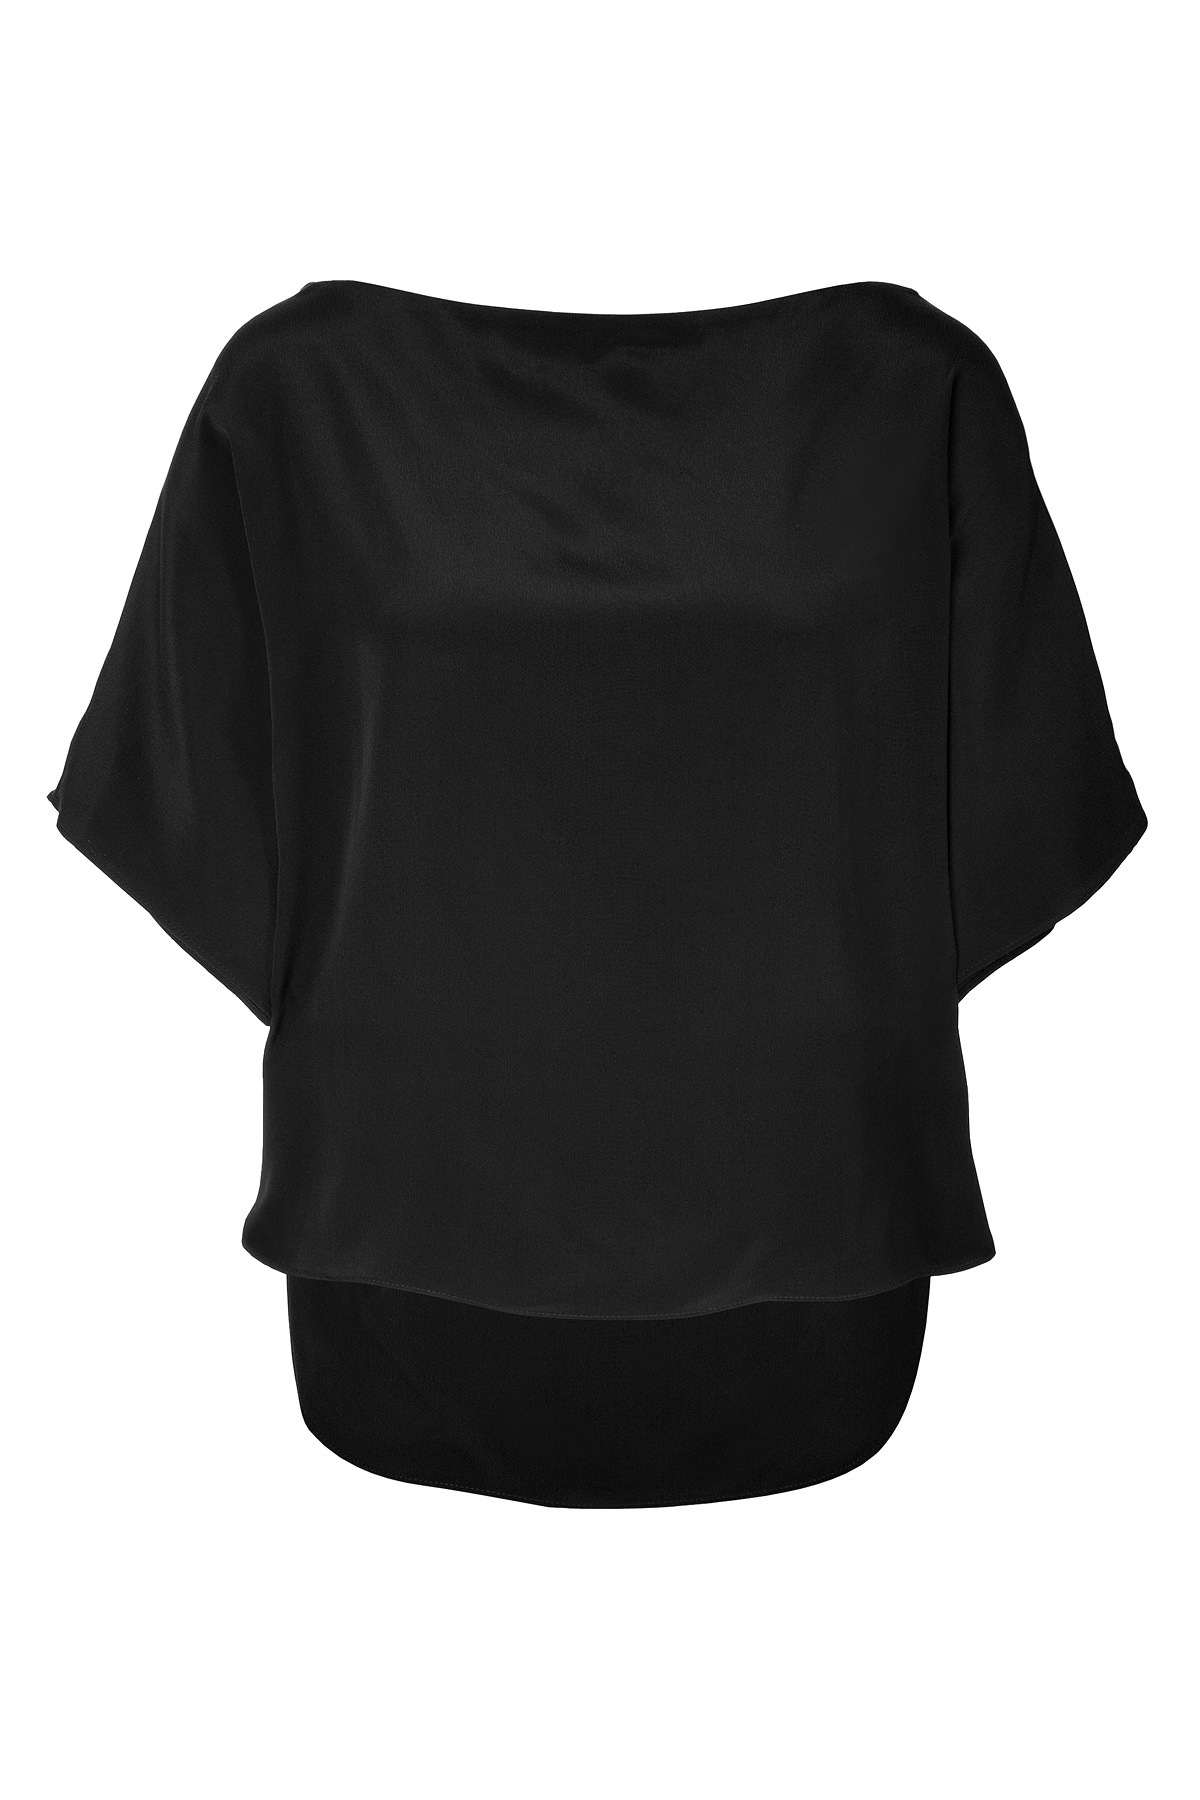 Milly Dolman Sleeve Silk Top in Black | Lyst